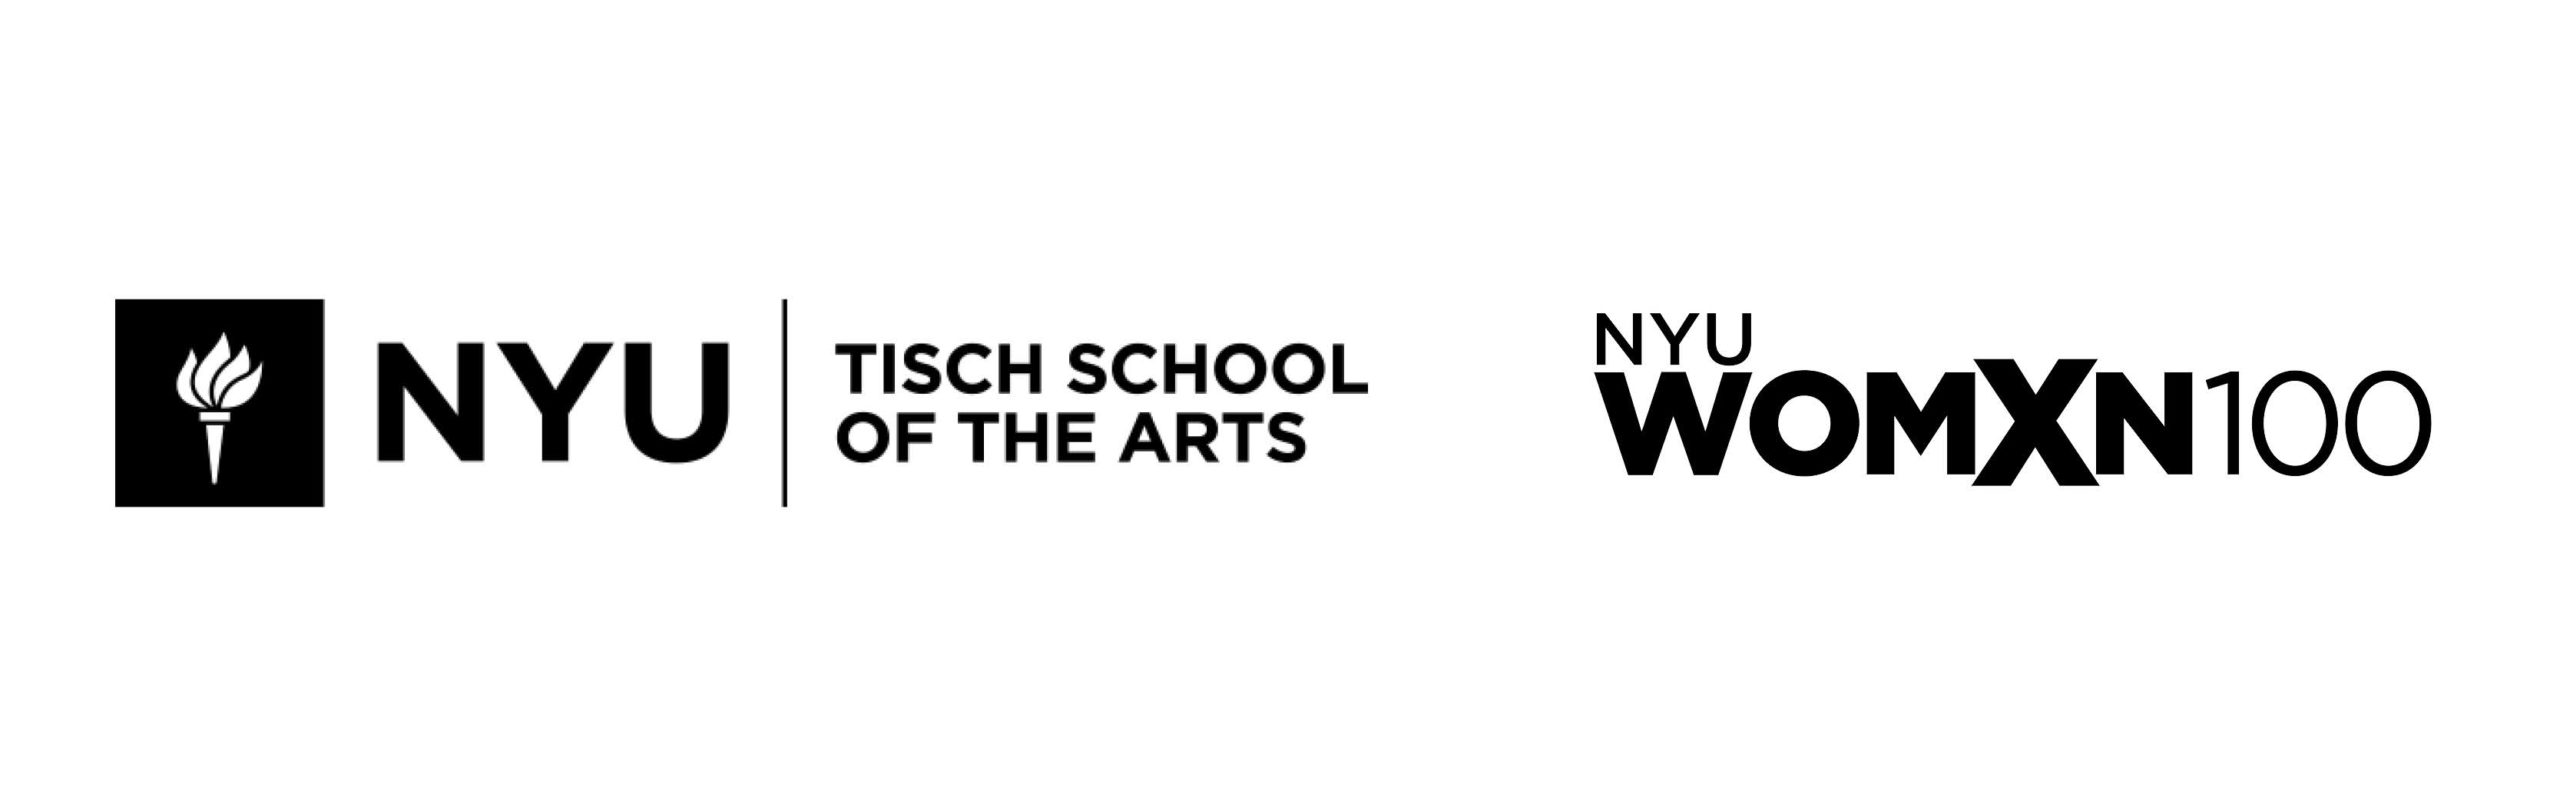 Logos: NYU Tisch School of the arts & NYU Womxn100